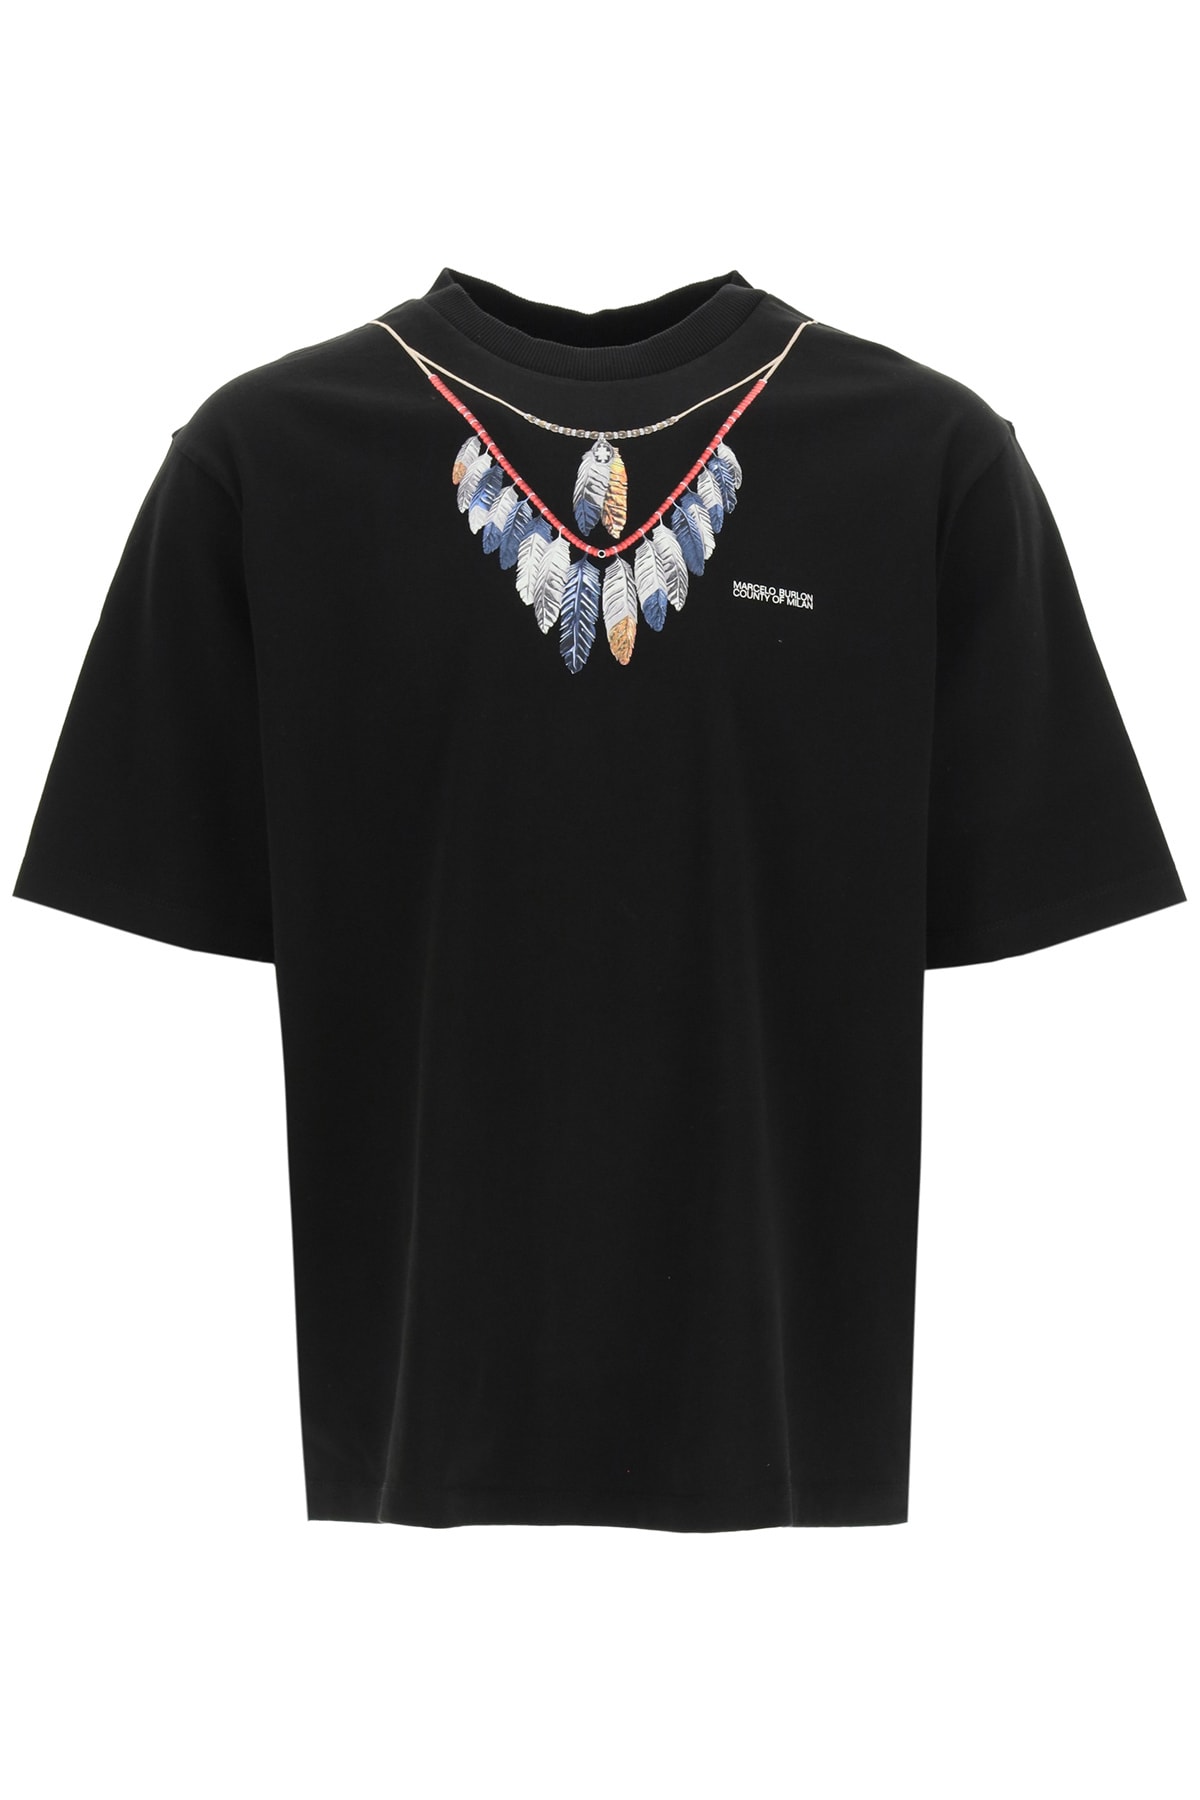 Marcelo Burlon Double Chain Feathers Oversized T-shirt